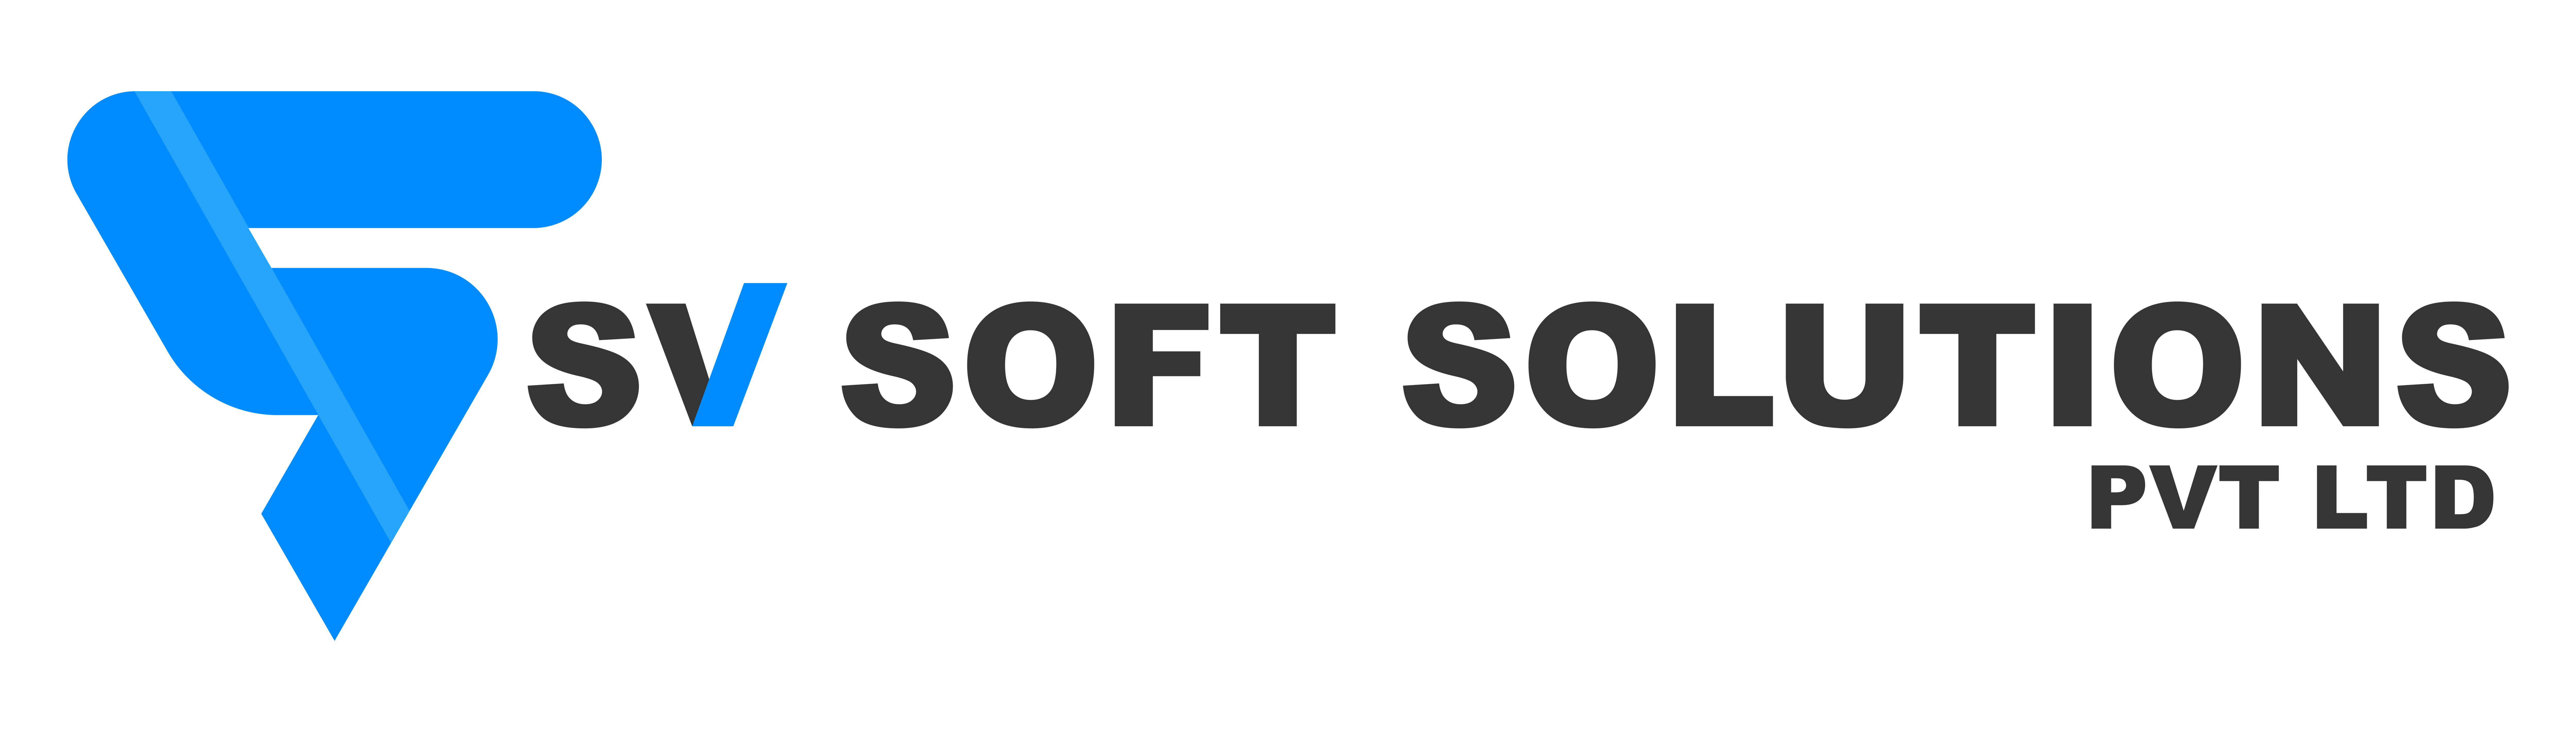 SV Soft Solutions Pvt Ltd